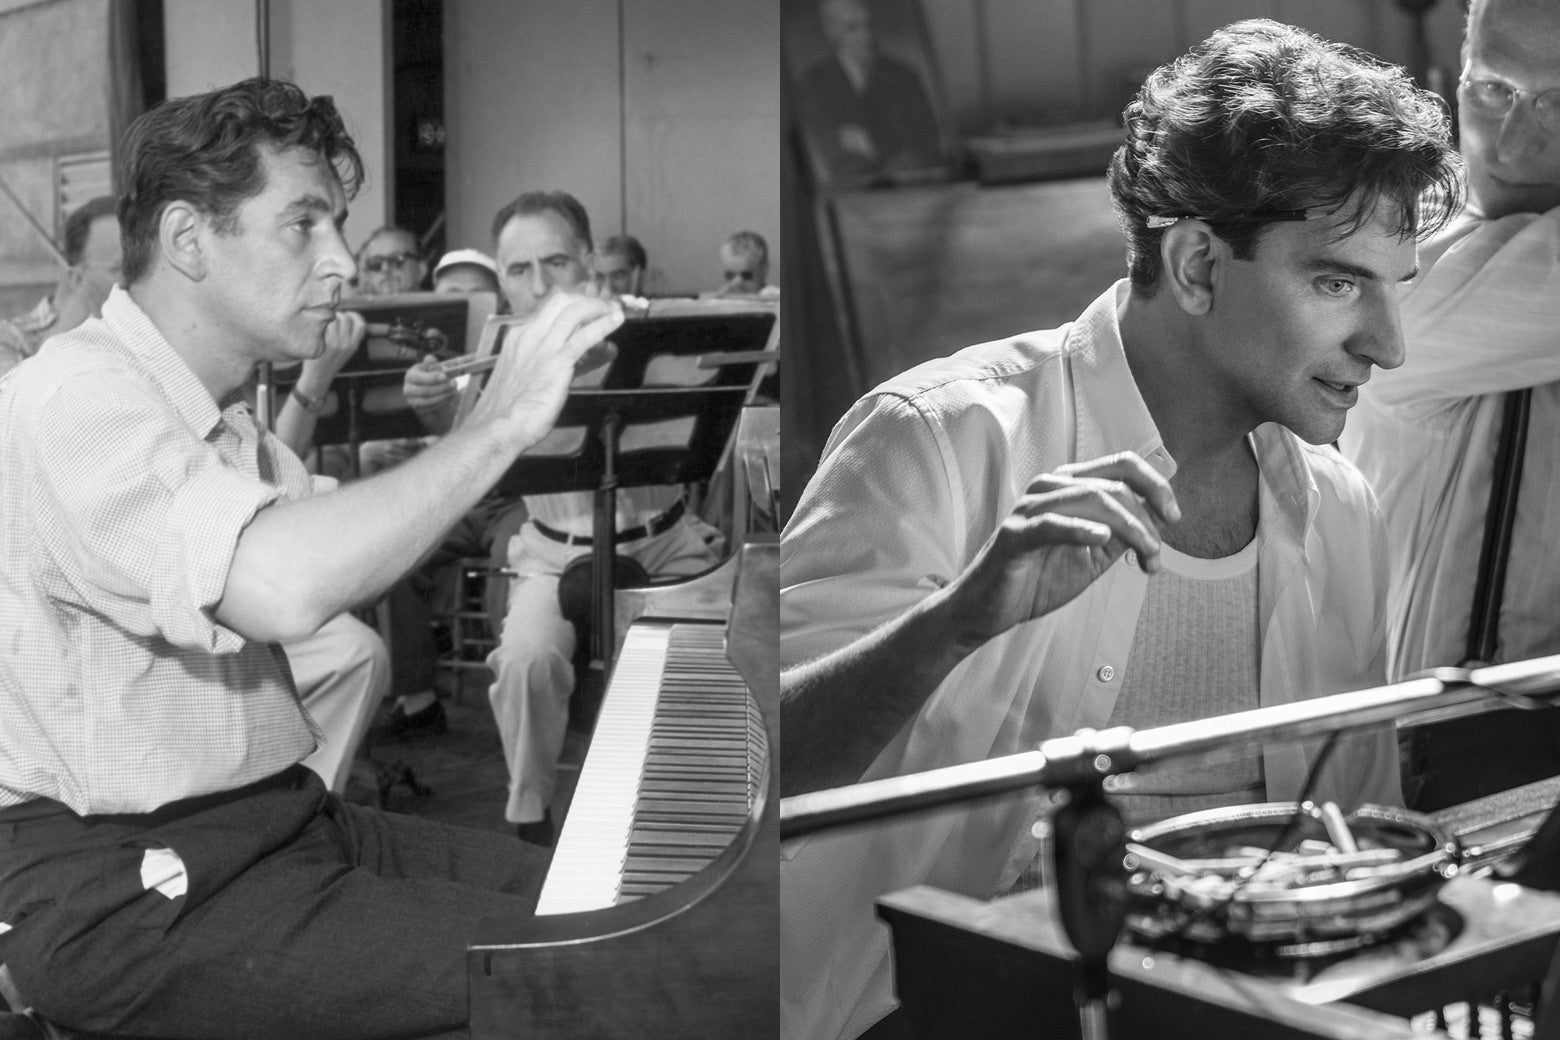 The Part Of Leonard Bernstein's Life 'Maestro' Doesn't Show